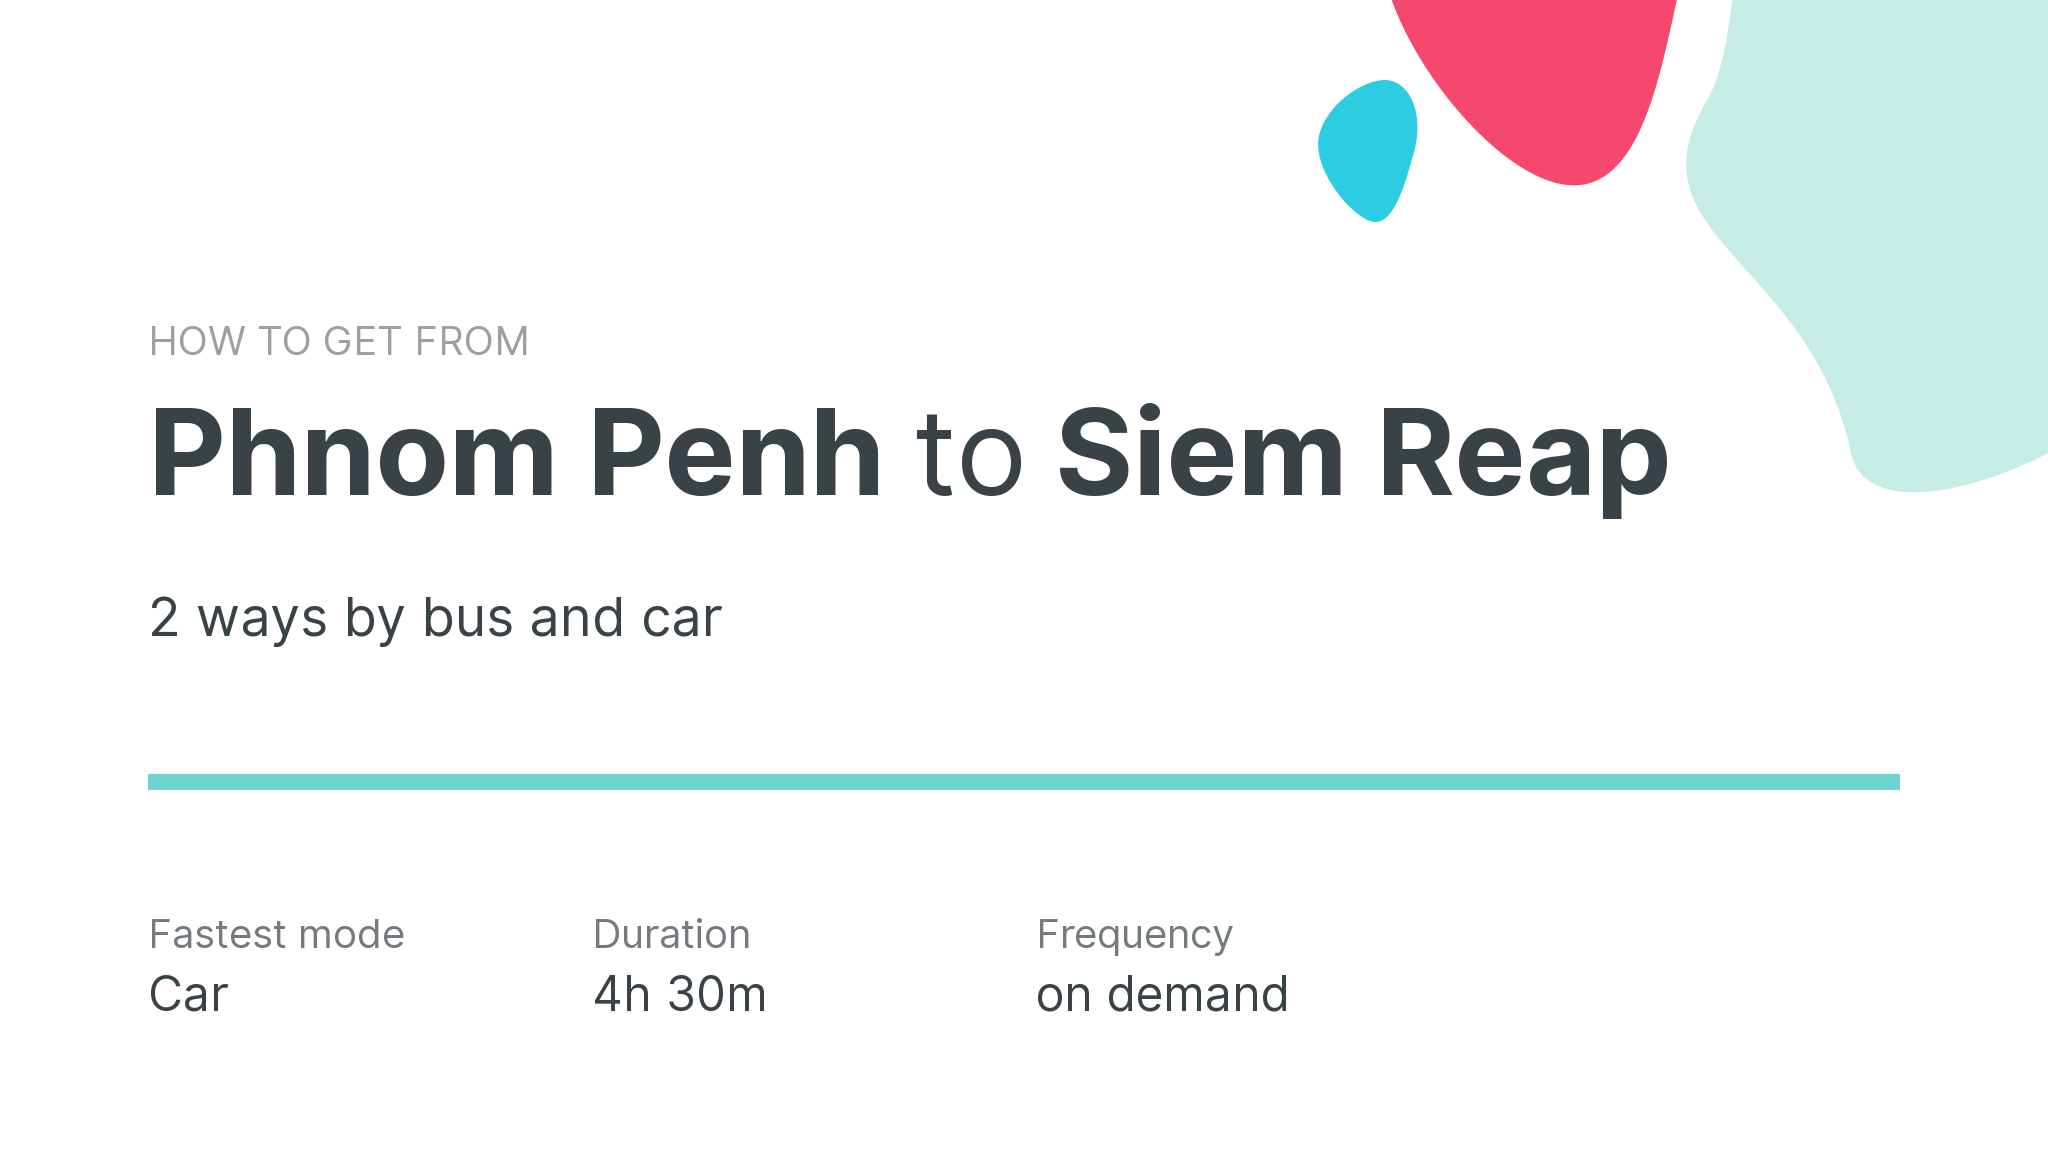 How do I get from Phnom Penh to Siem Reap